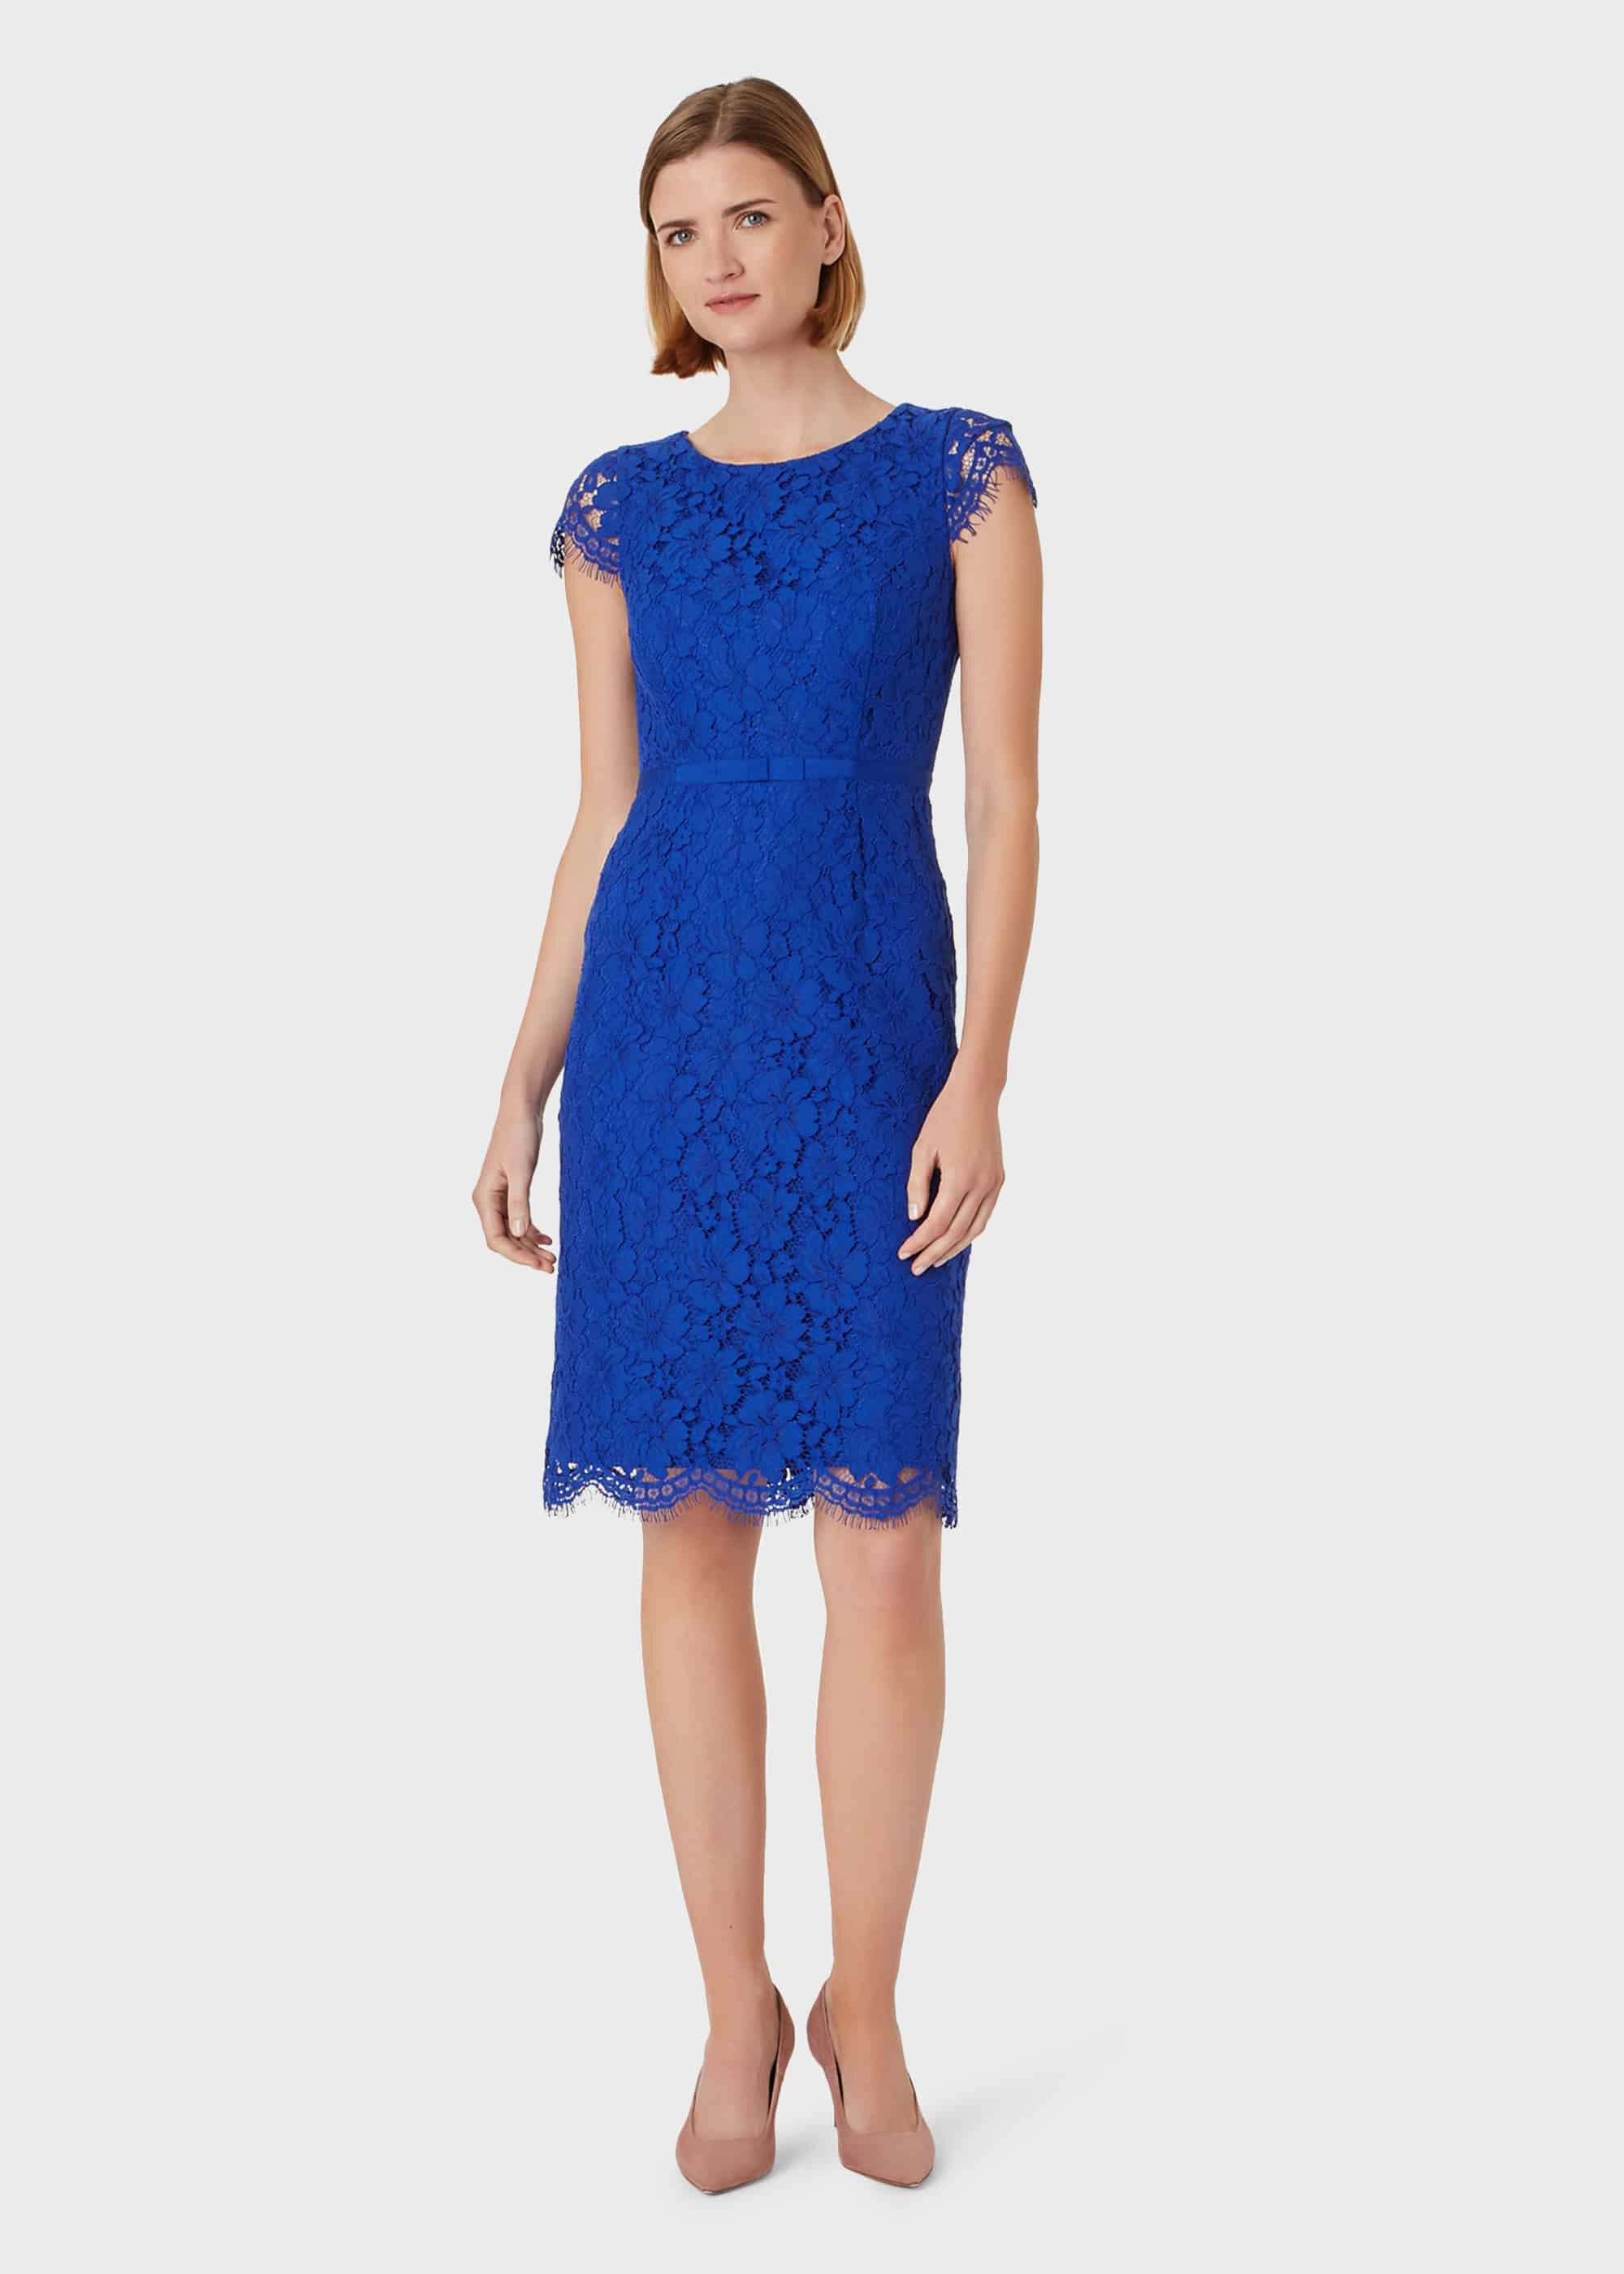 hobbs blue lace dress